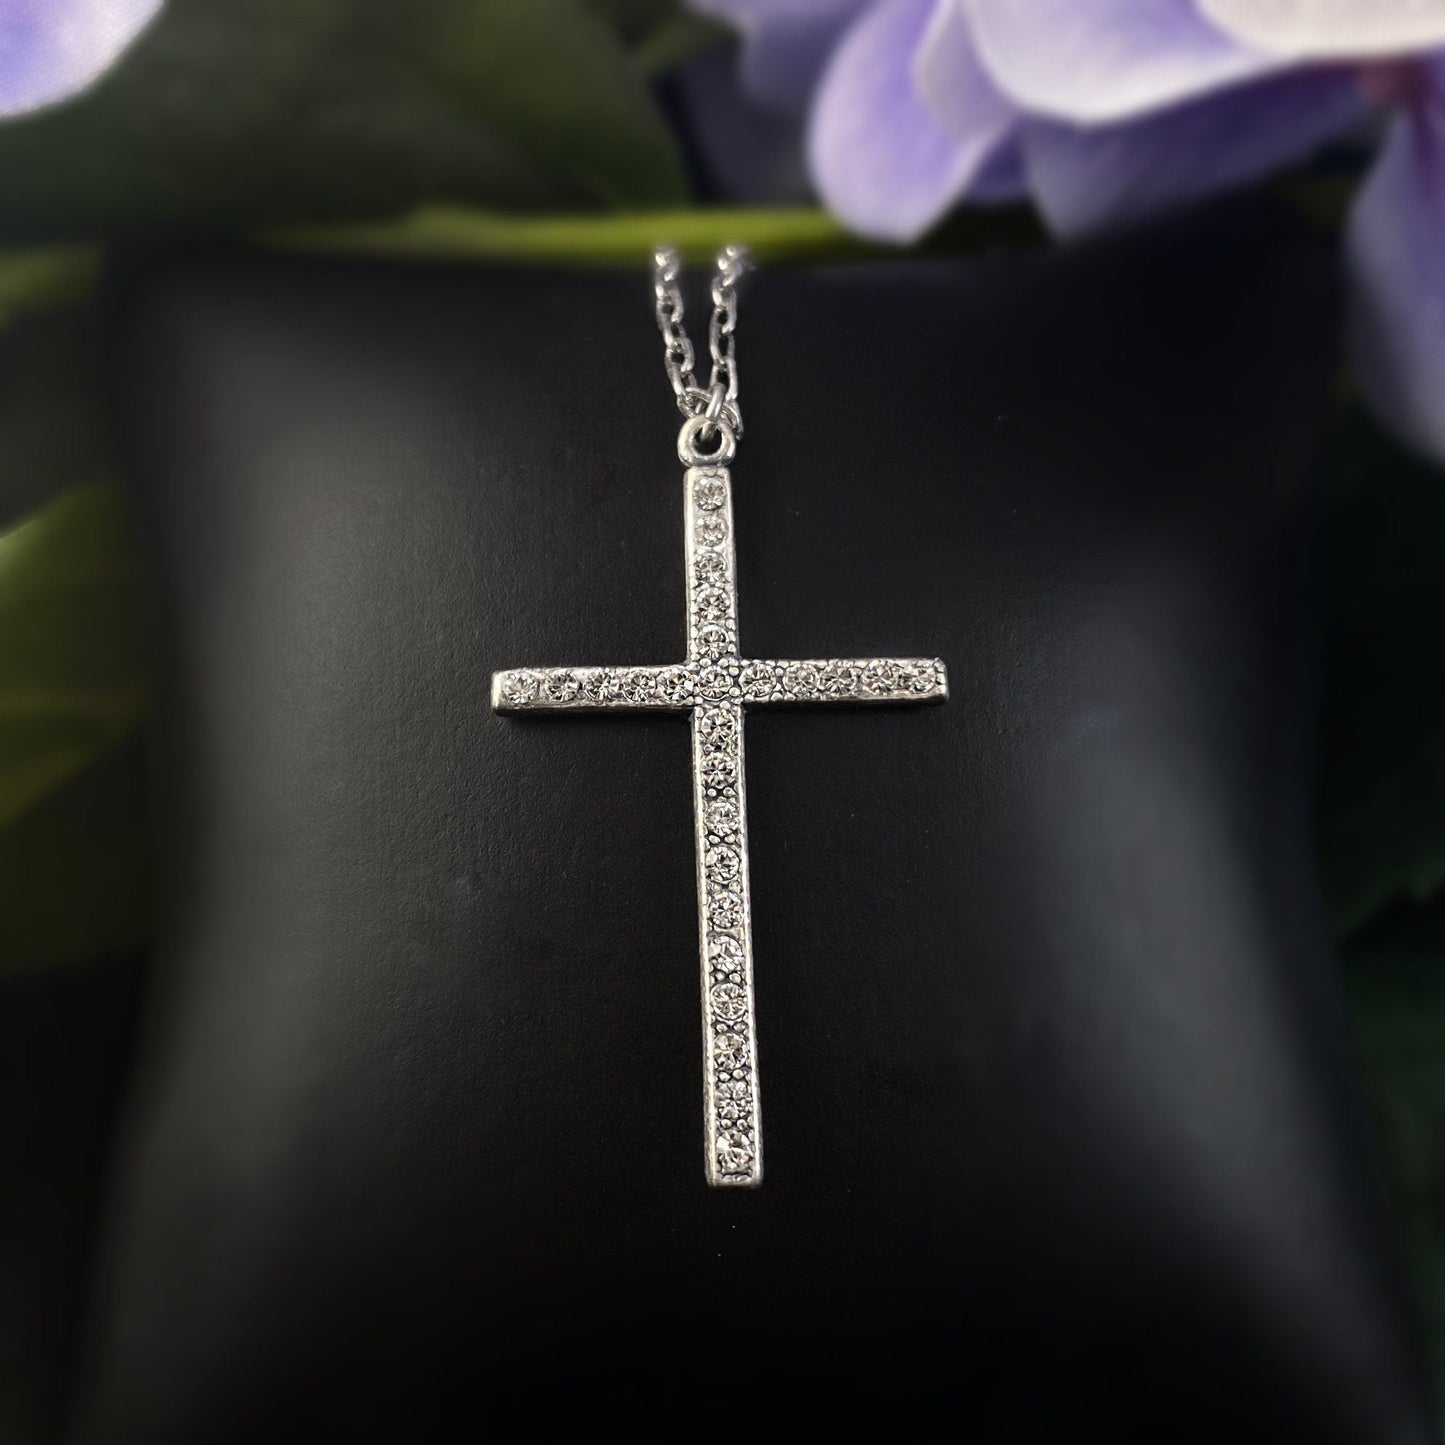 La Vie Parisienne by Catherine Popesco - Silver Cross Necklace with Swarovski crystals